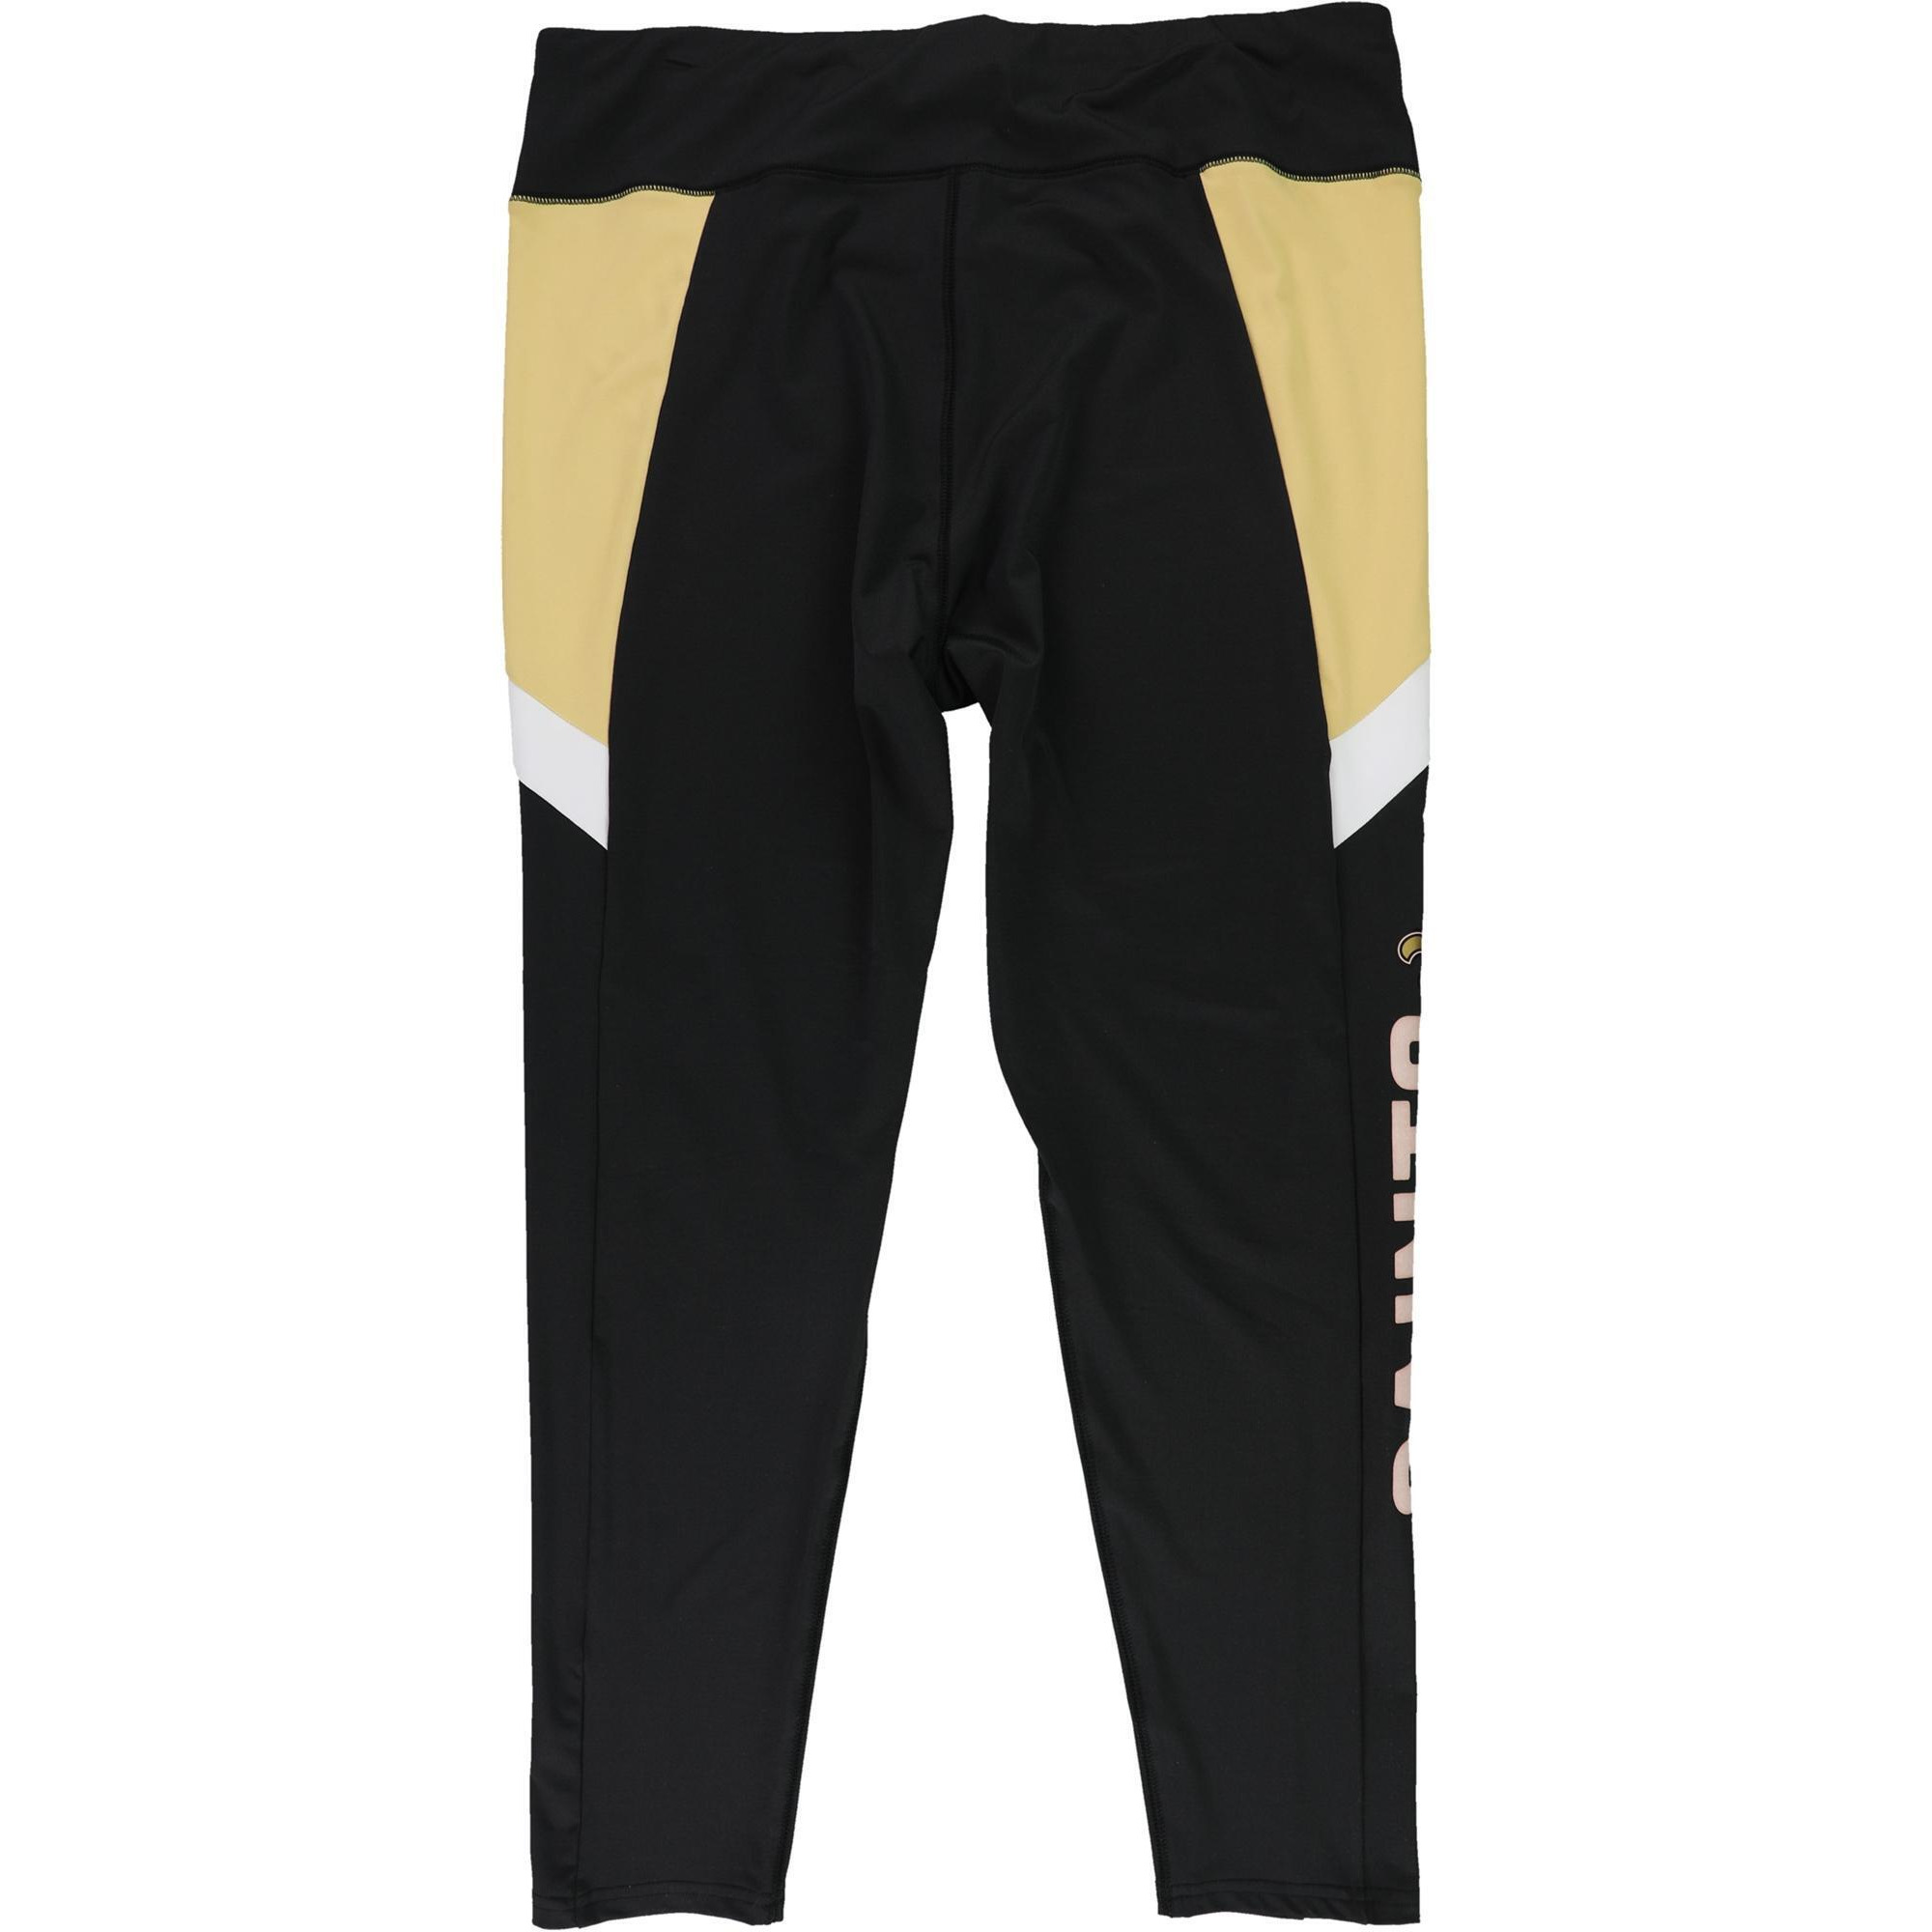 NFL Womens New Orleans Saints Compression Athletic Pants, Style # 6J900938 alternate image